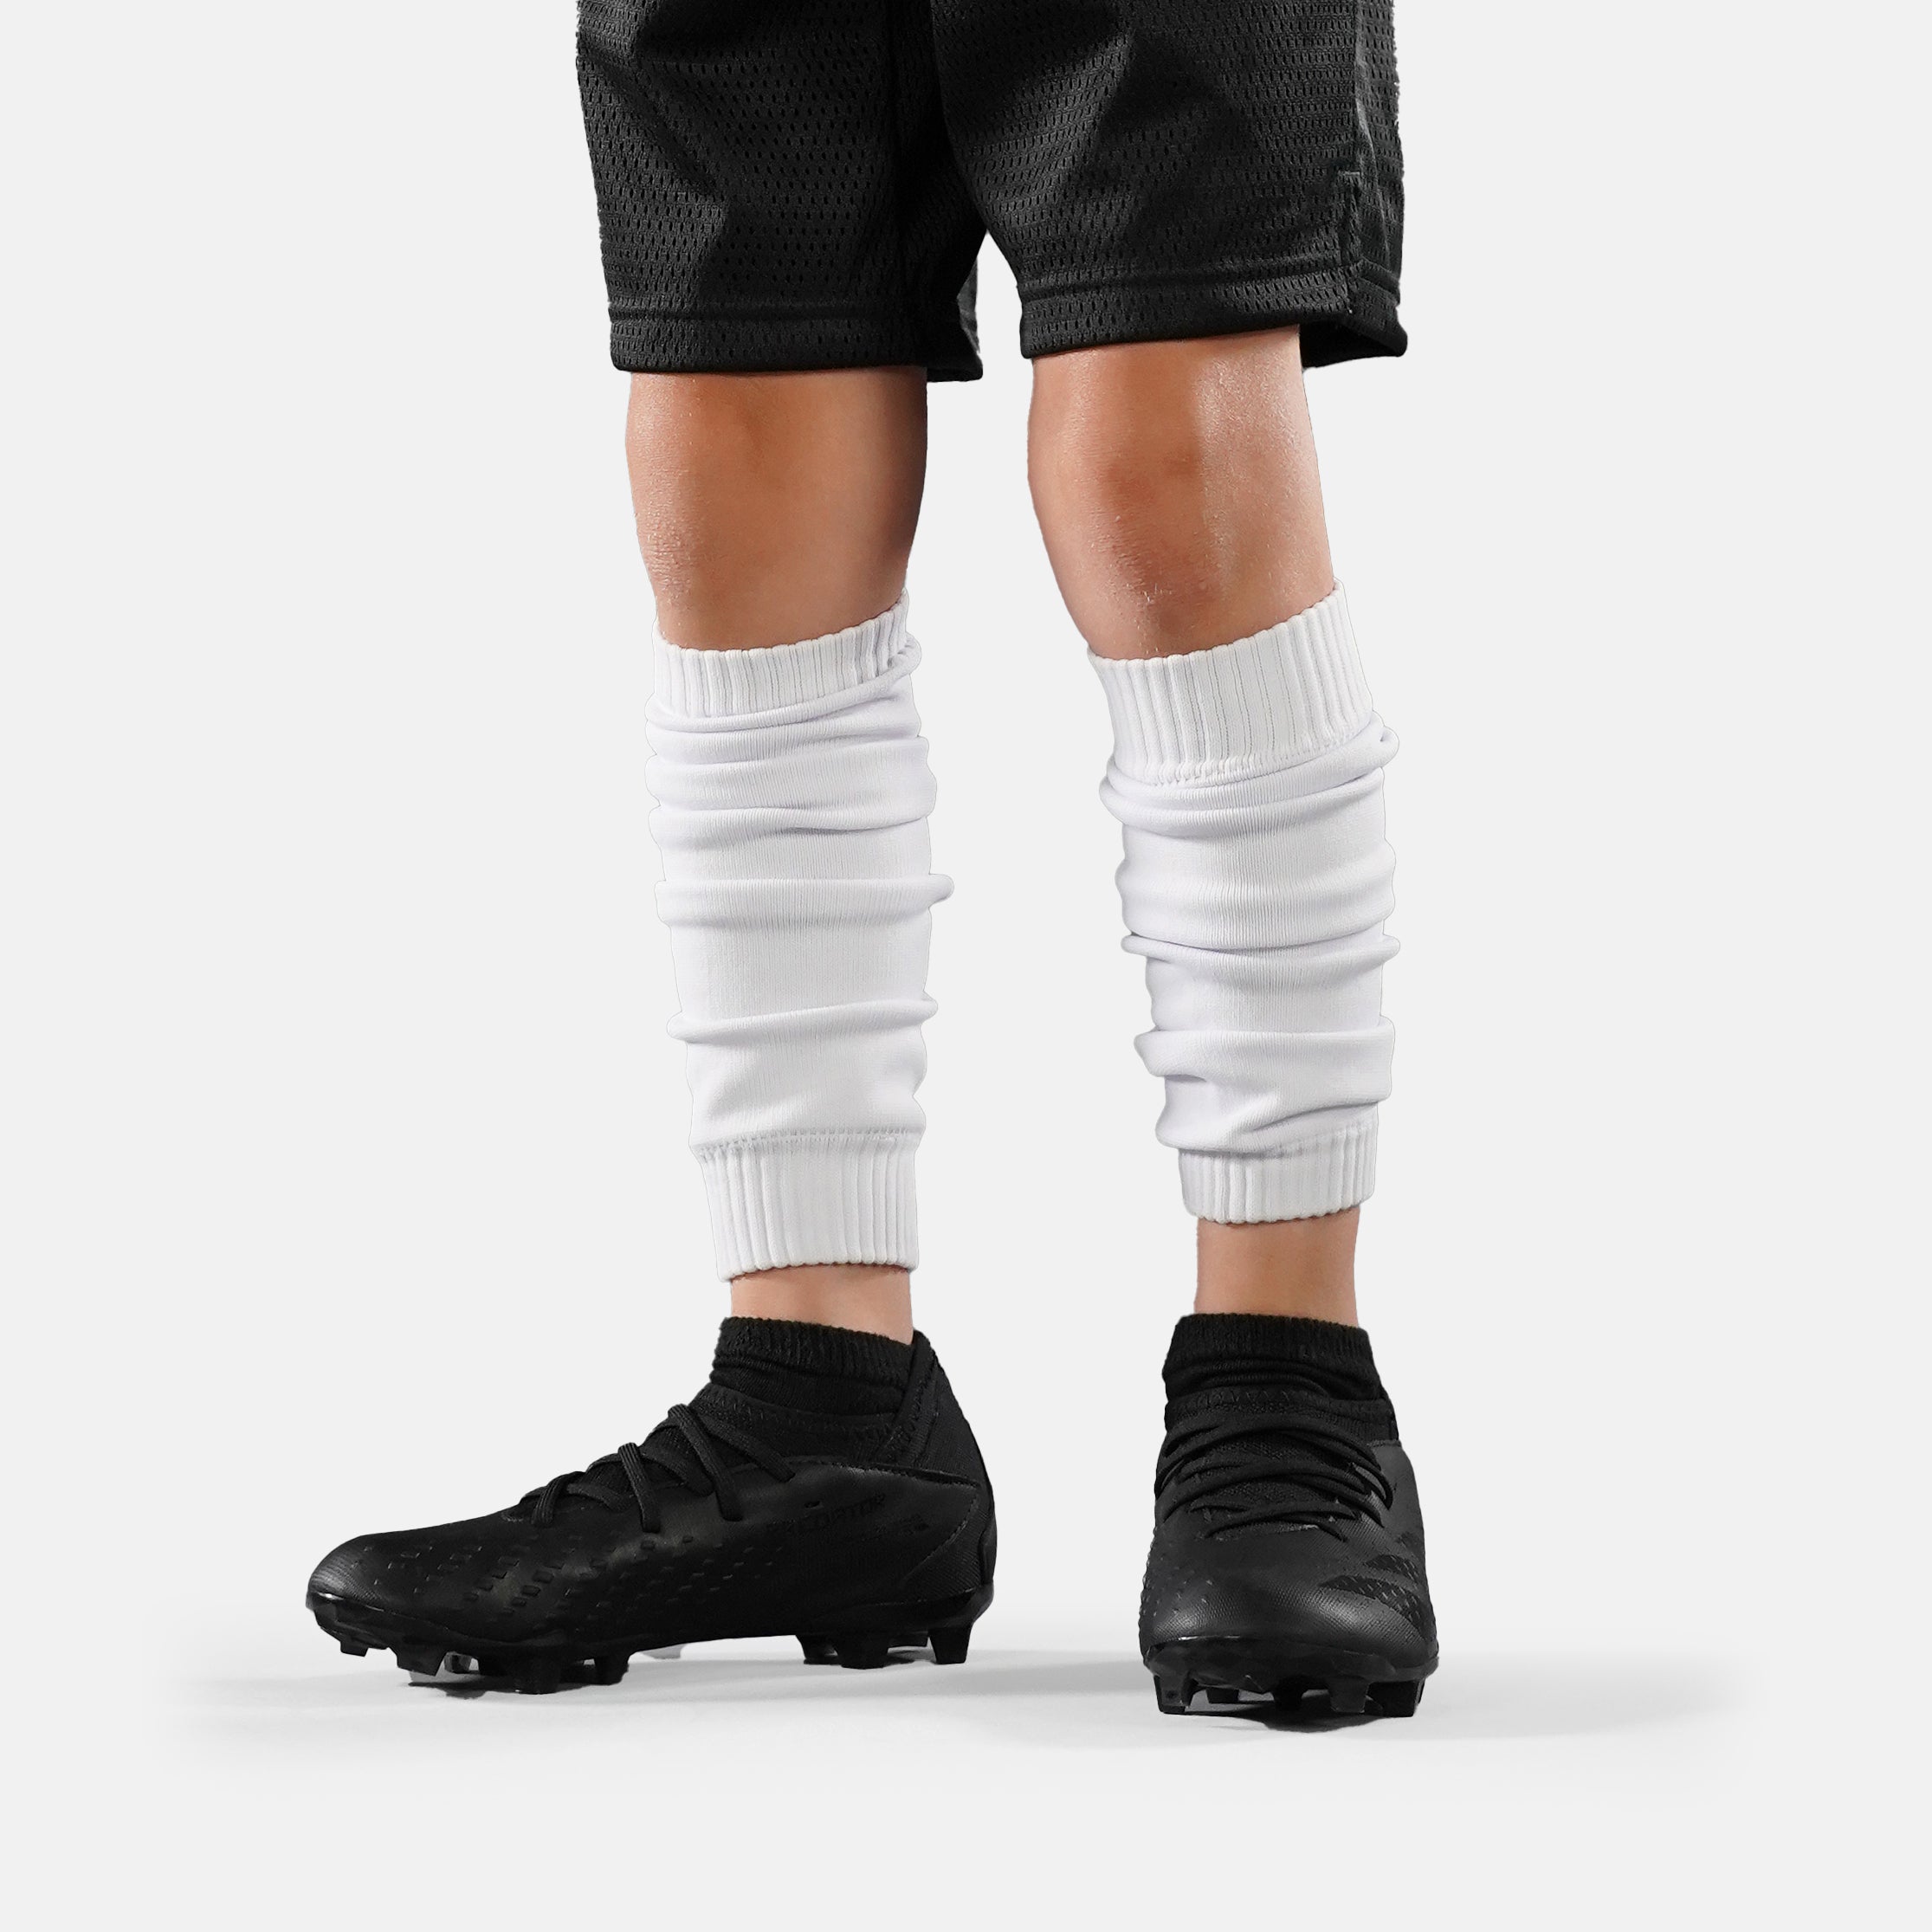  Toulite 4 Pair Football Leg Sleeves for Kids Football